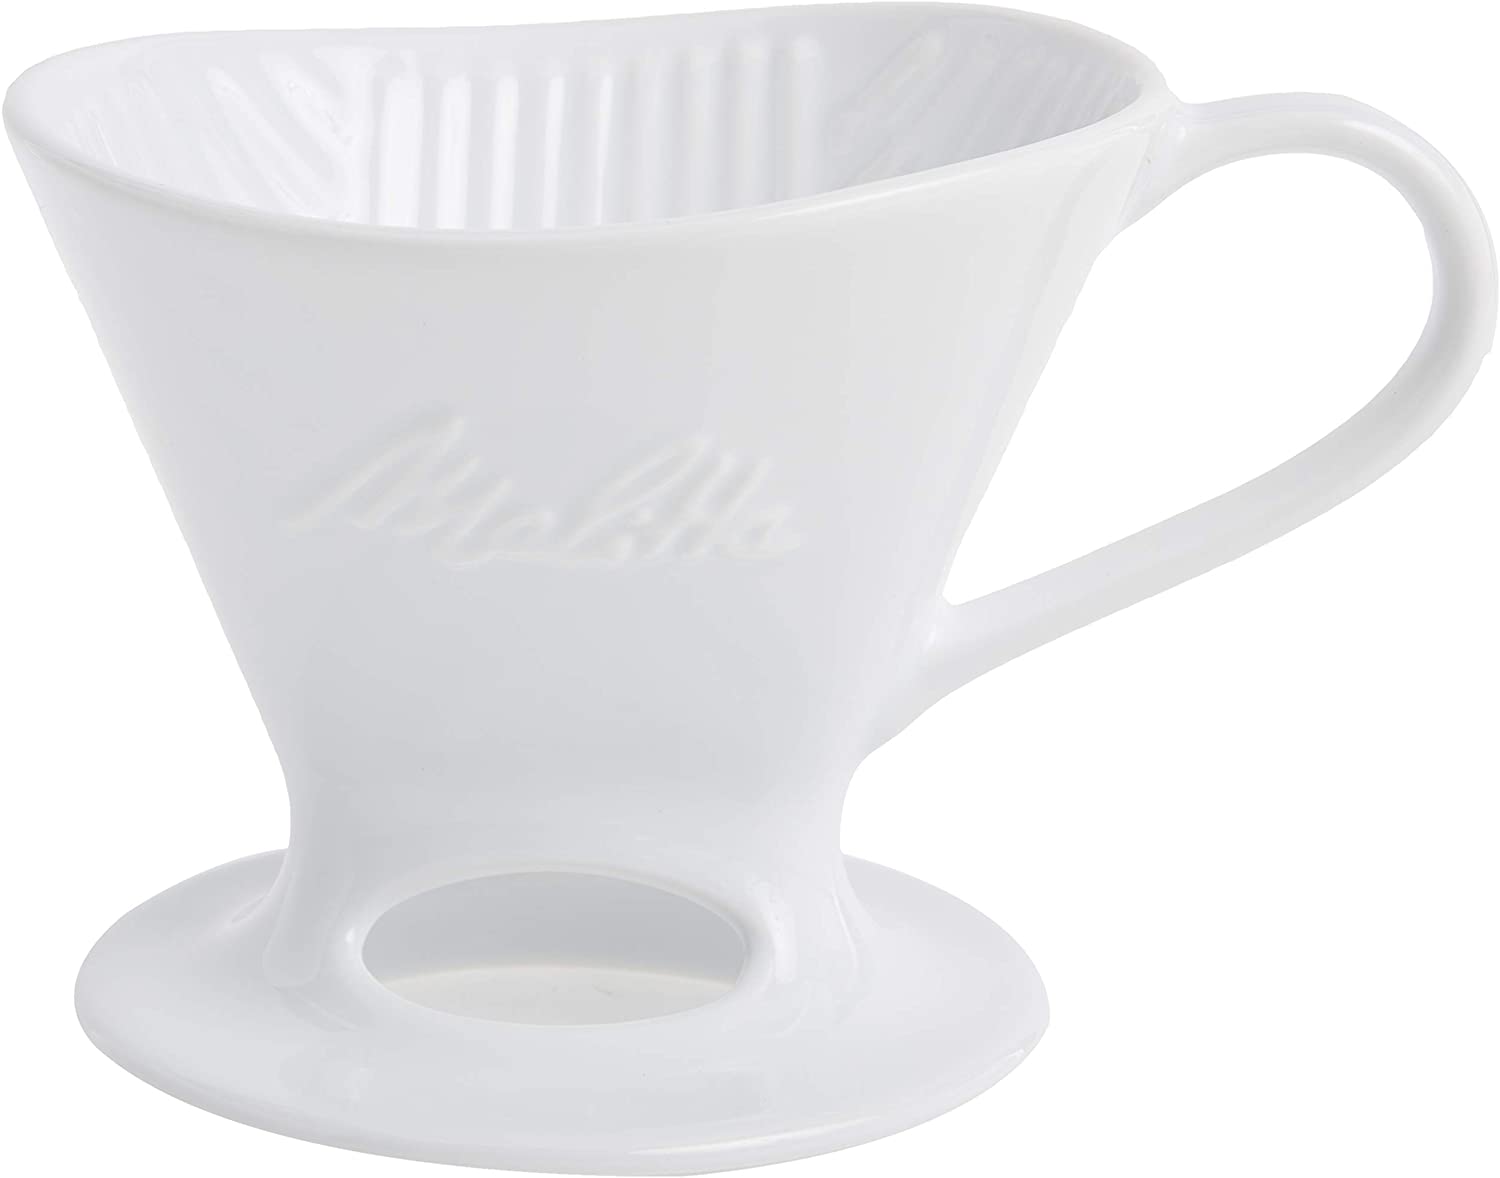 Melitta 1-Cup Porcelain Coffee Maker White Gloss